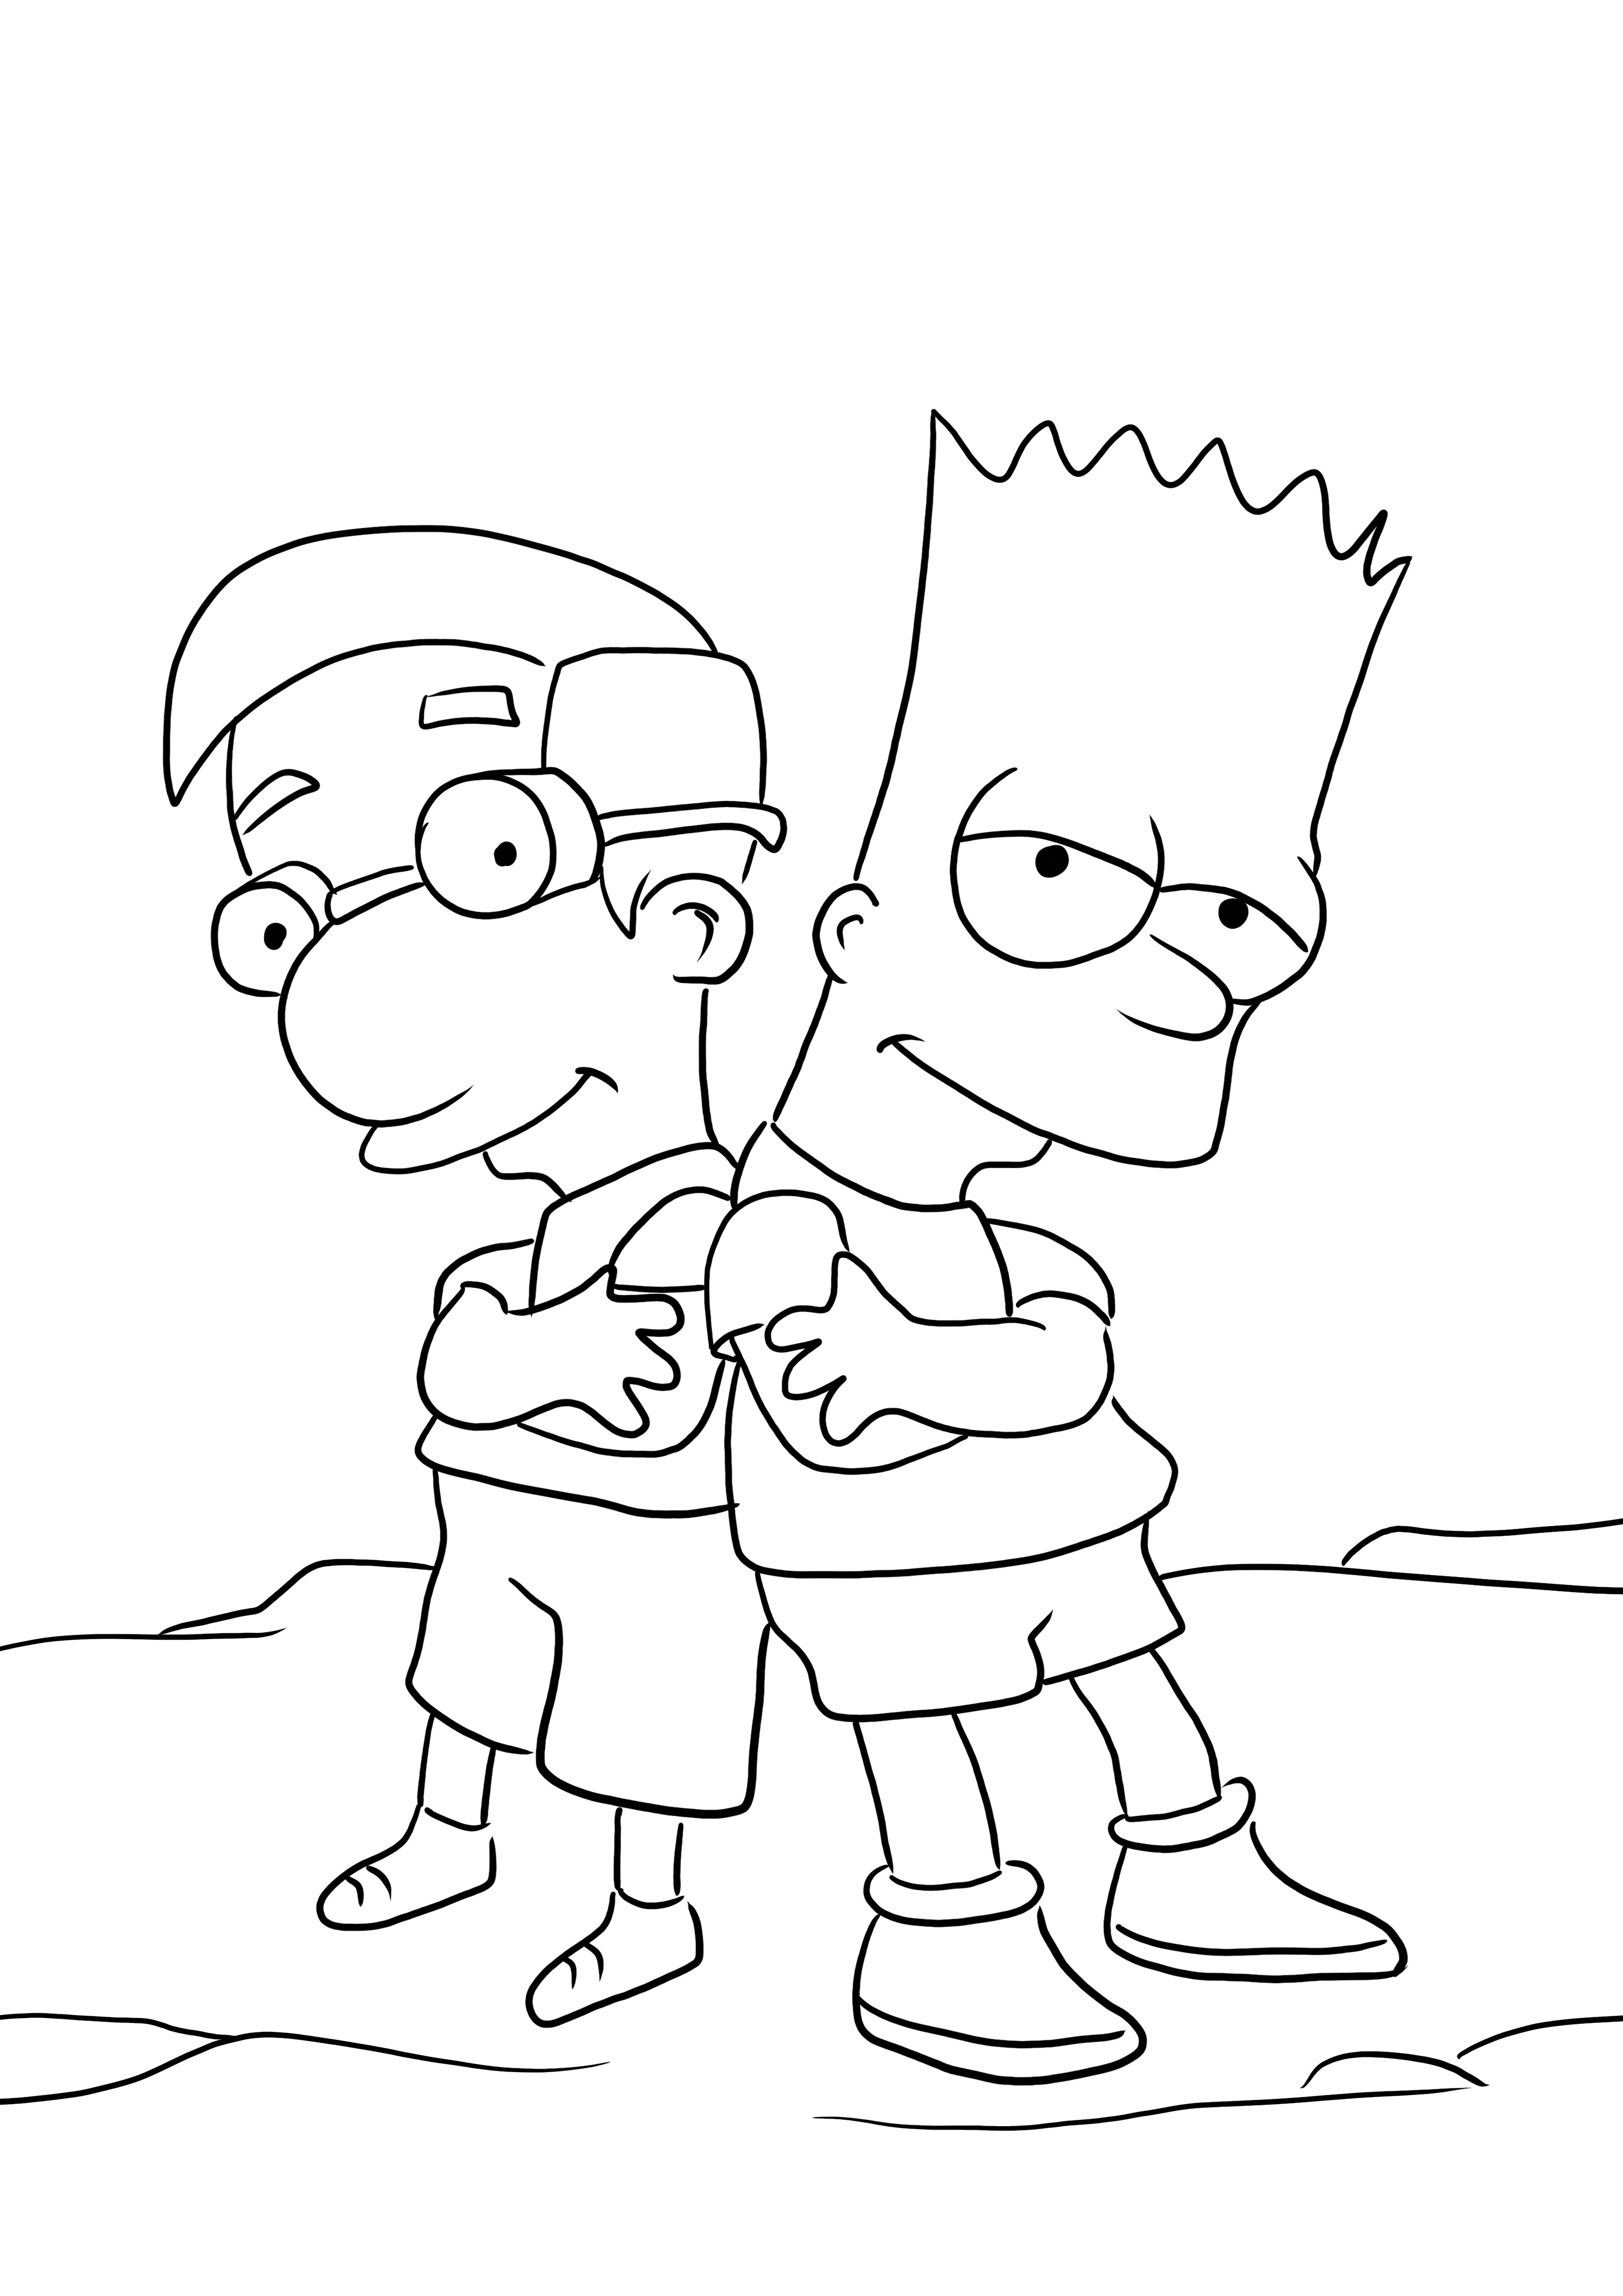 Bart i Millhouse do kolorowania i darmowego pobrania obrazka